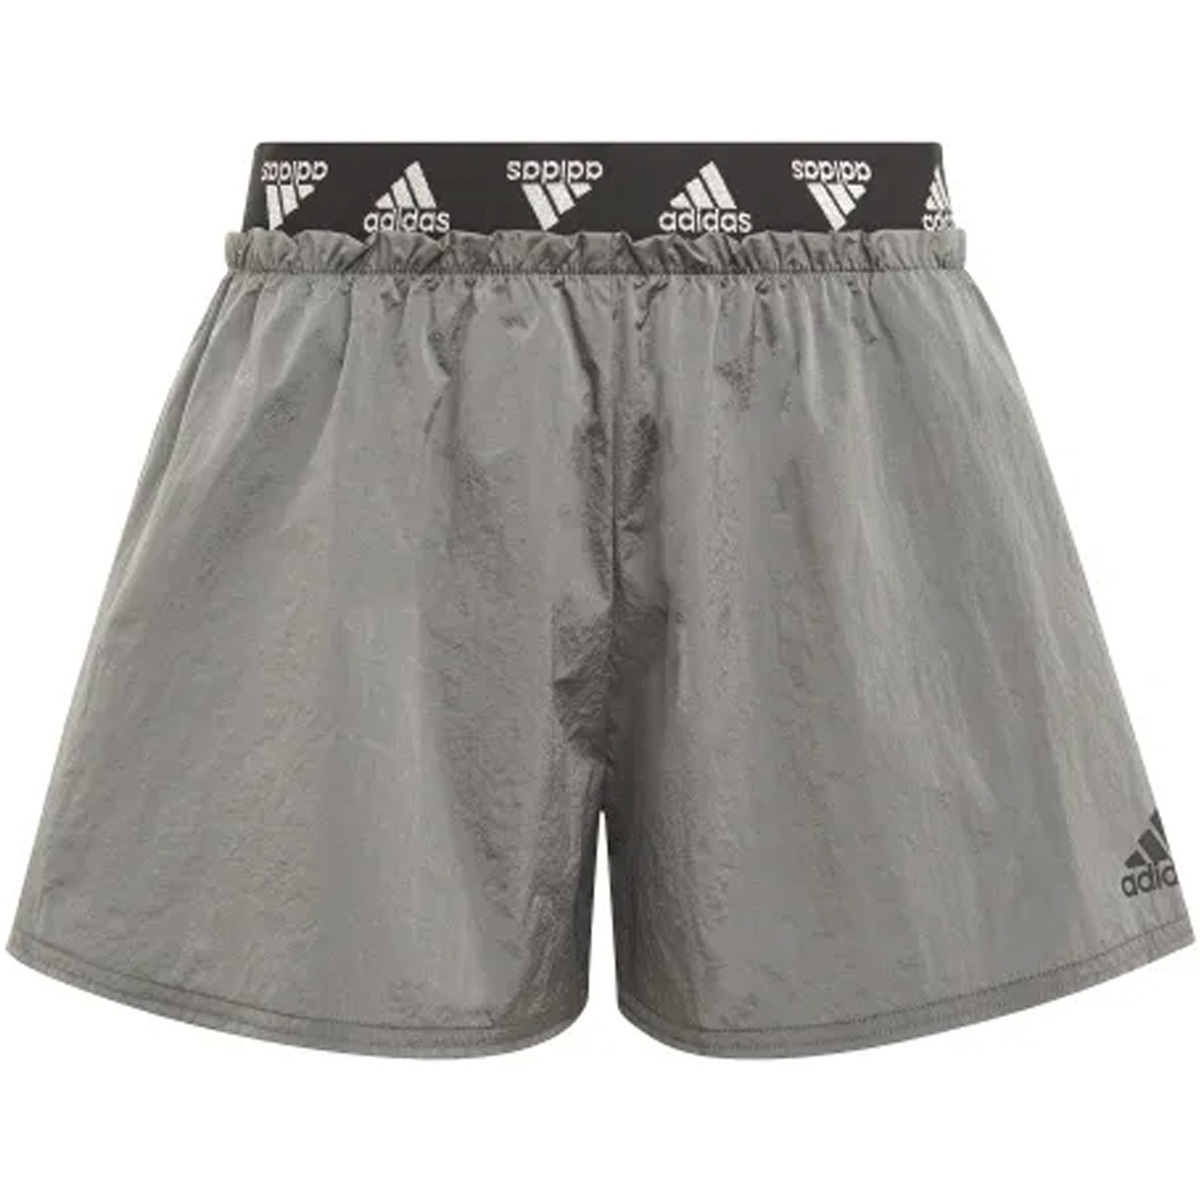 Kleidung Kinder Shorts / Bermudas adidas Originals H13217 Grau